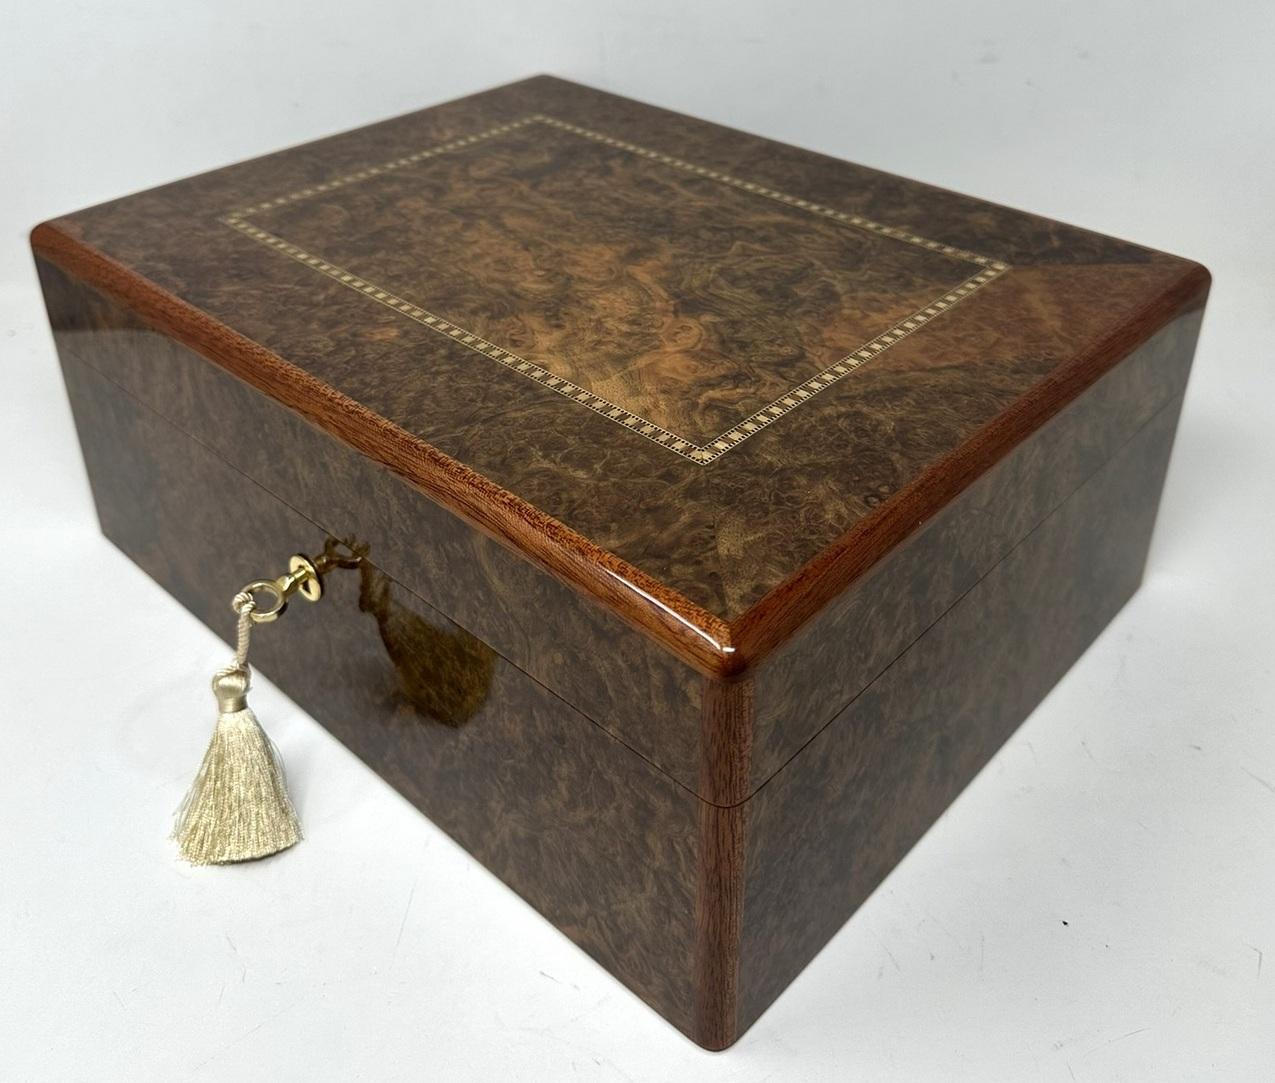 Polished Burl Walnut Mahogany Handmade Jewelry Casket Box by Manning of Ireland Irish New